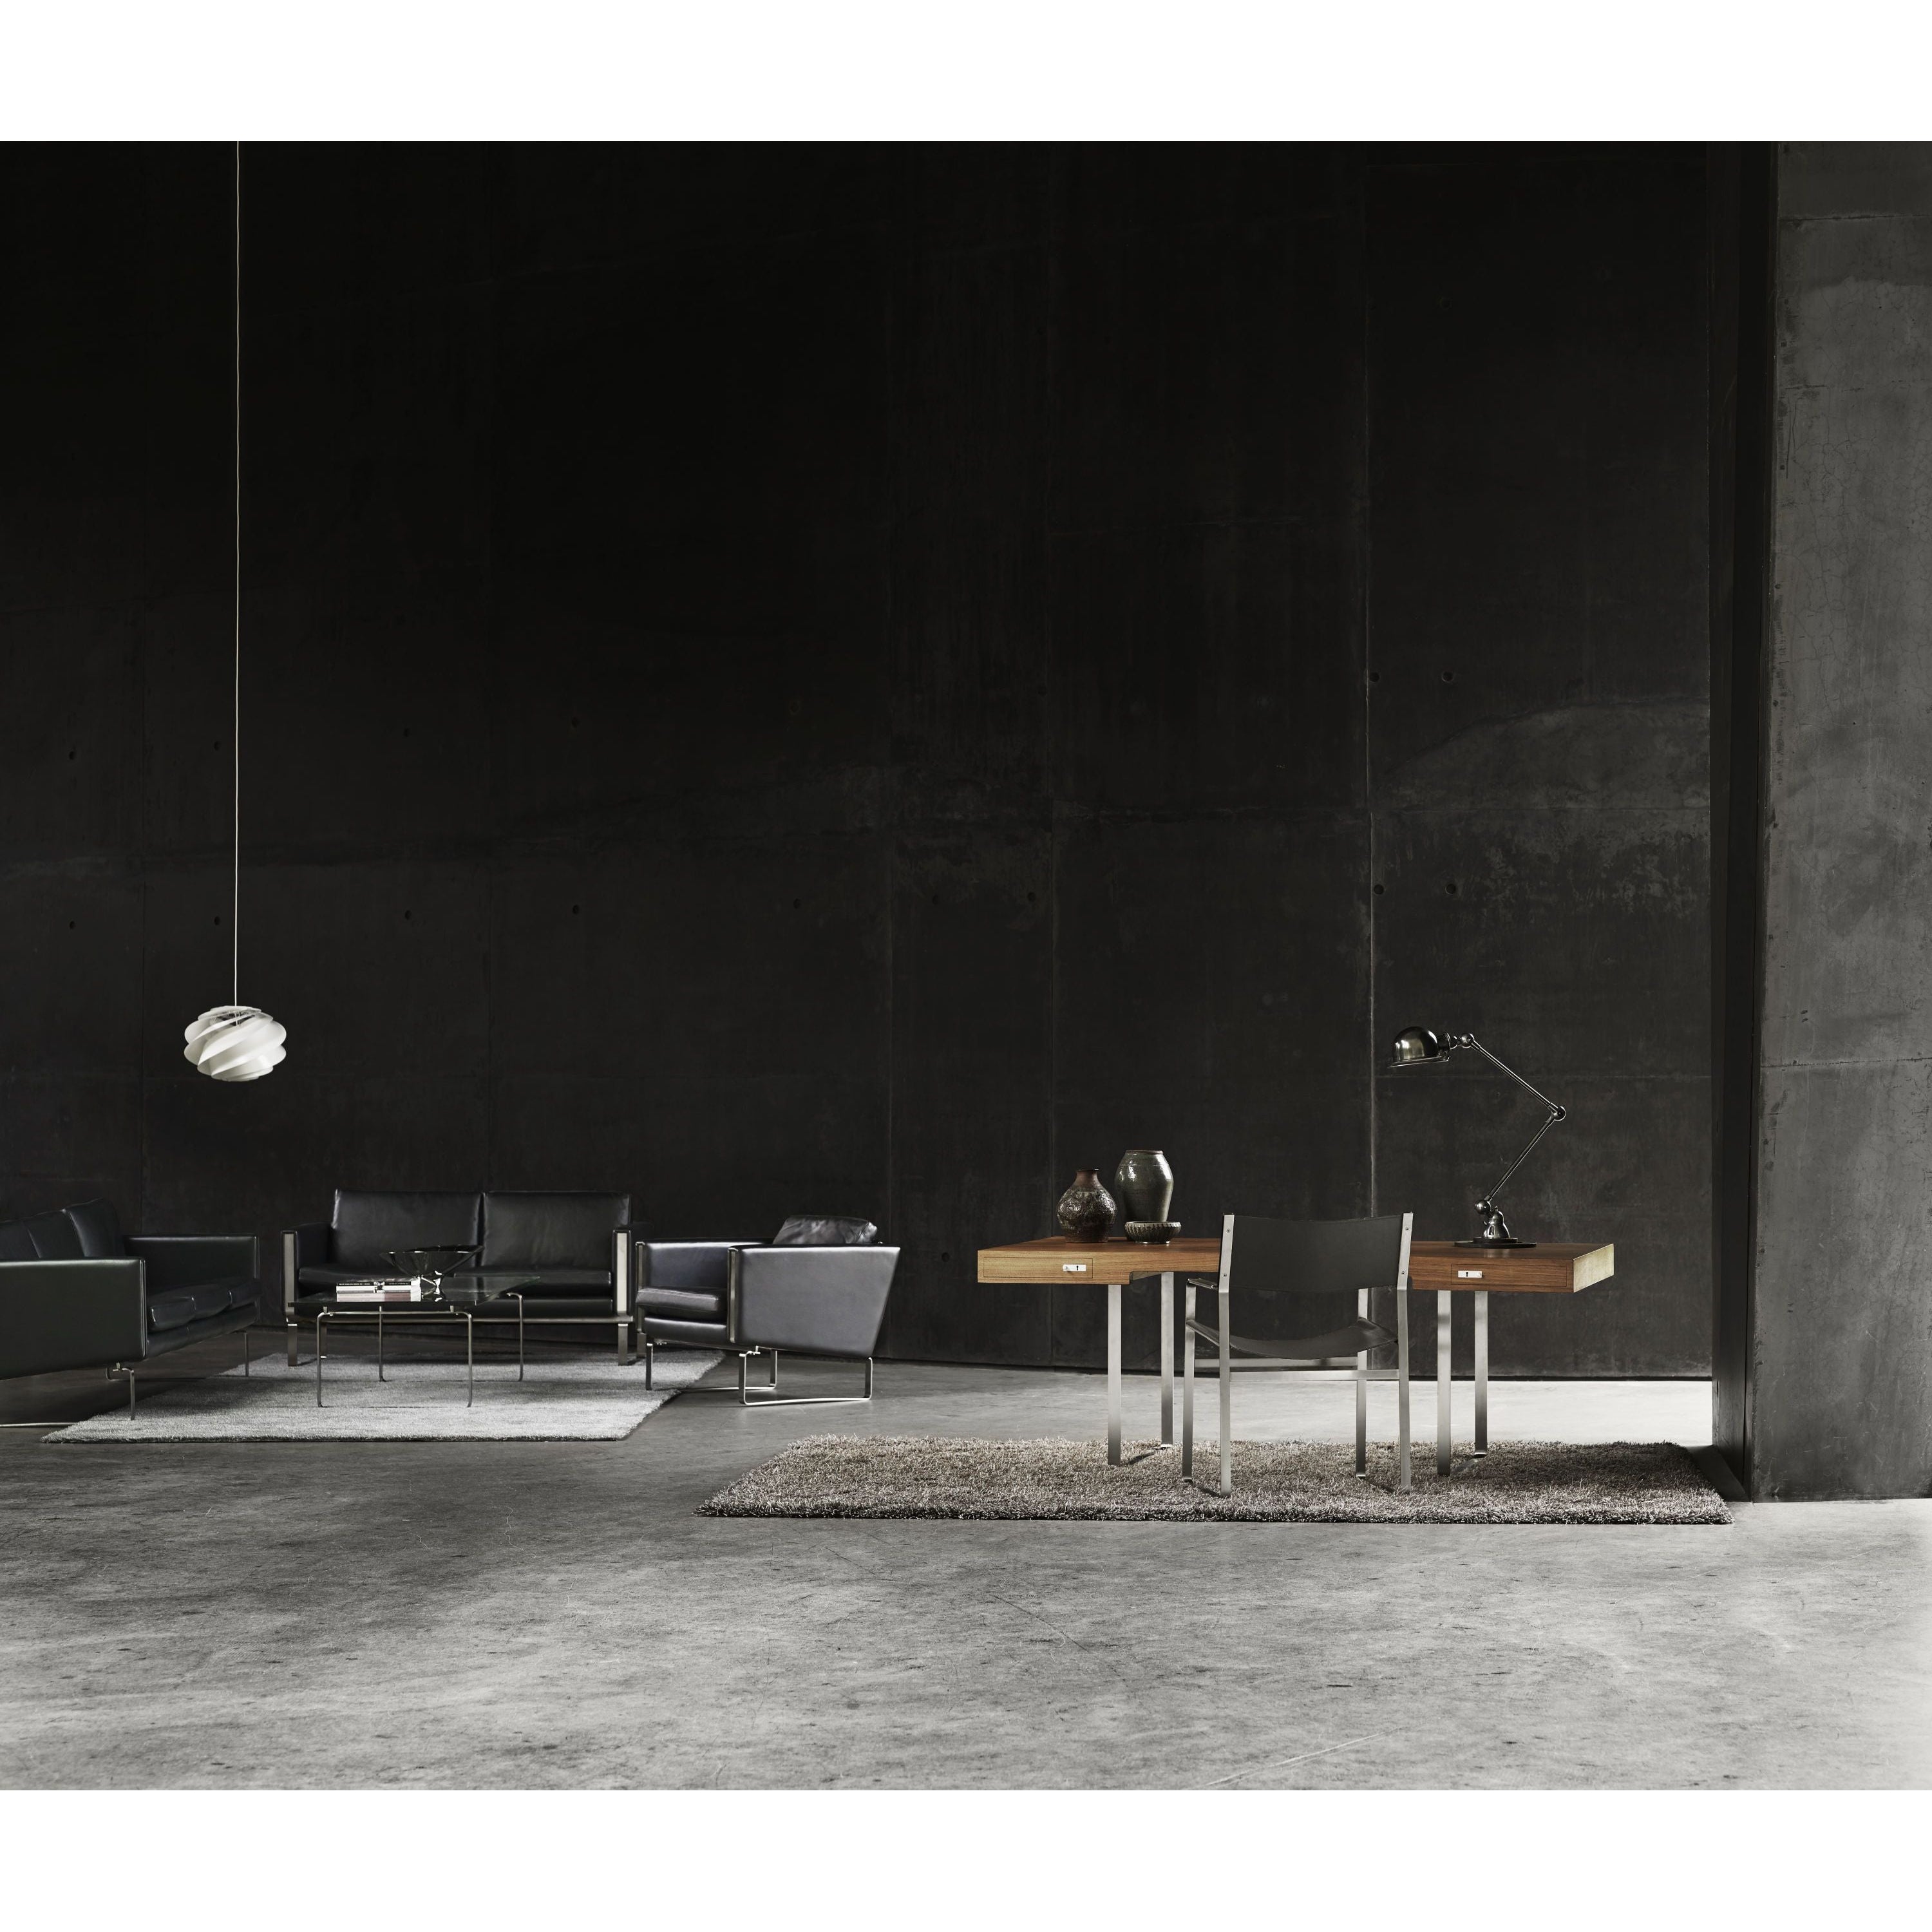 Carl Hansen CH104 sofa, stål/brunt læder